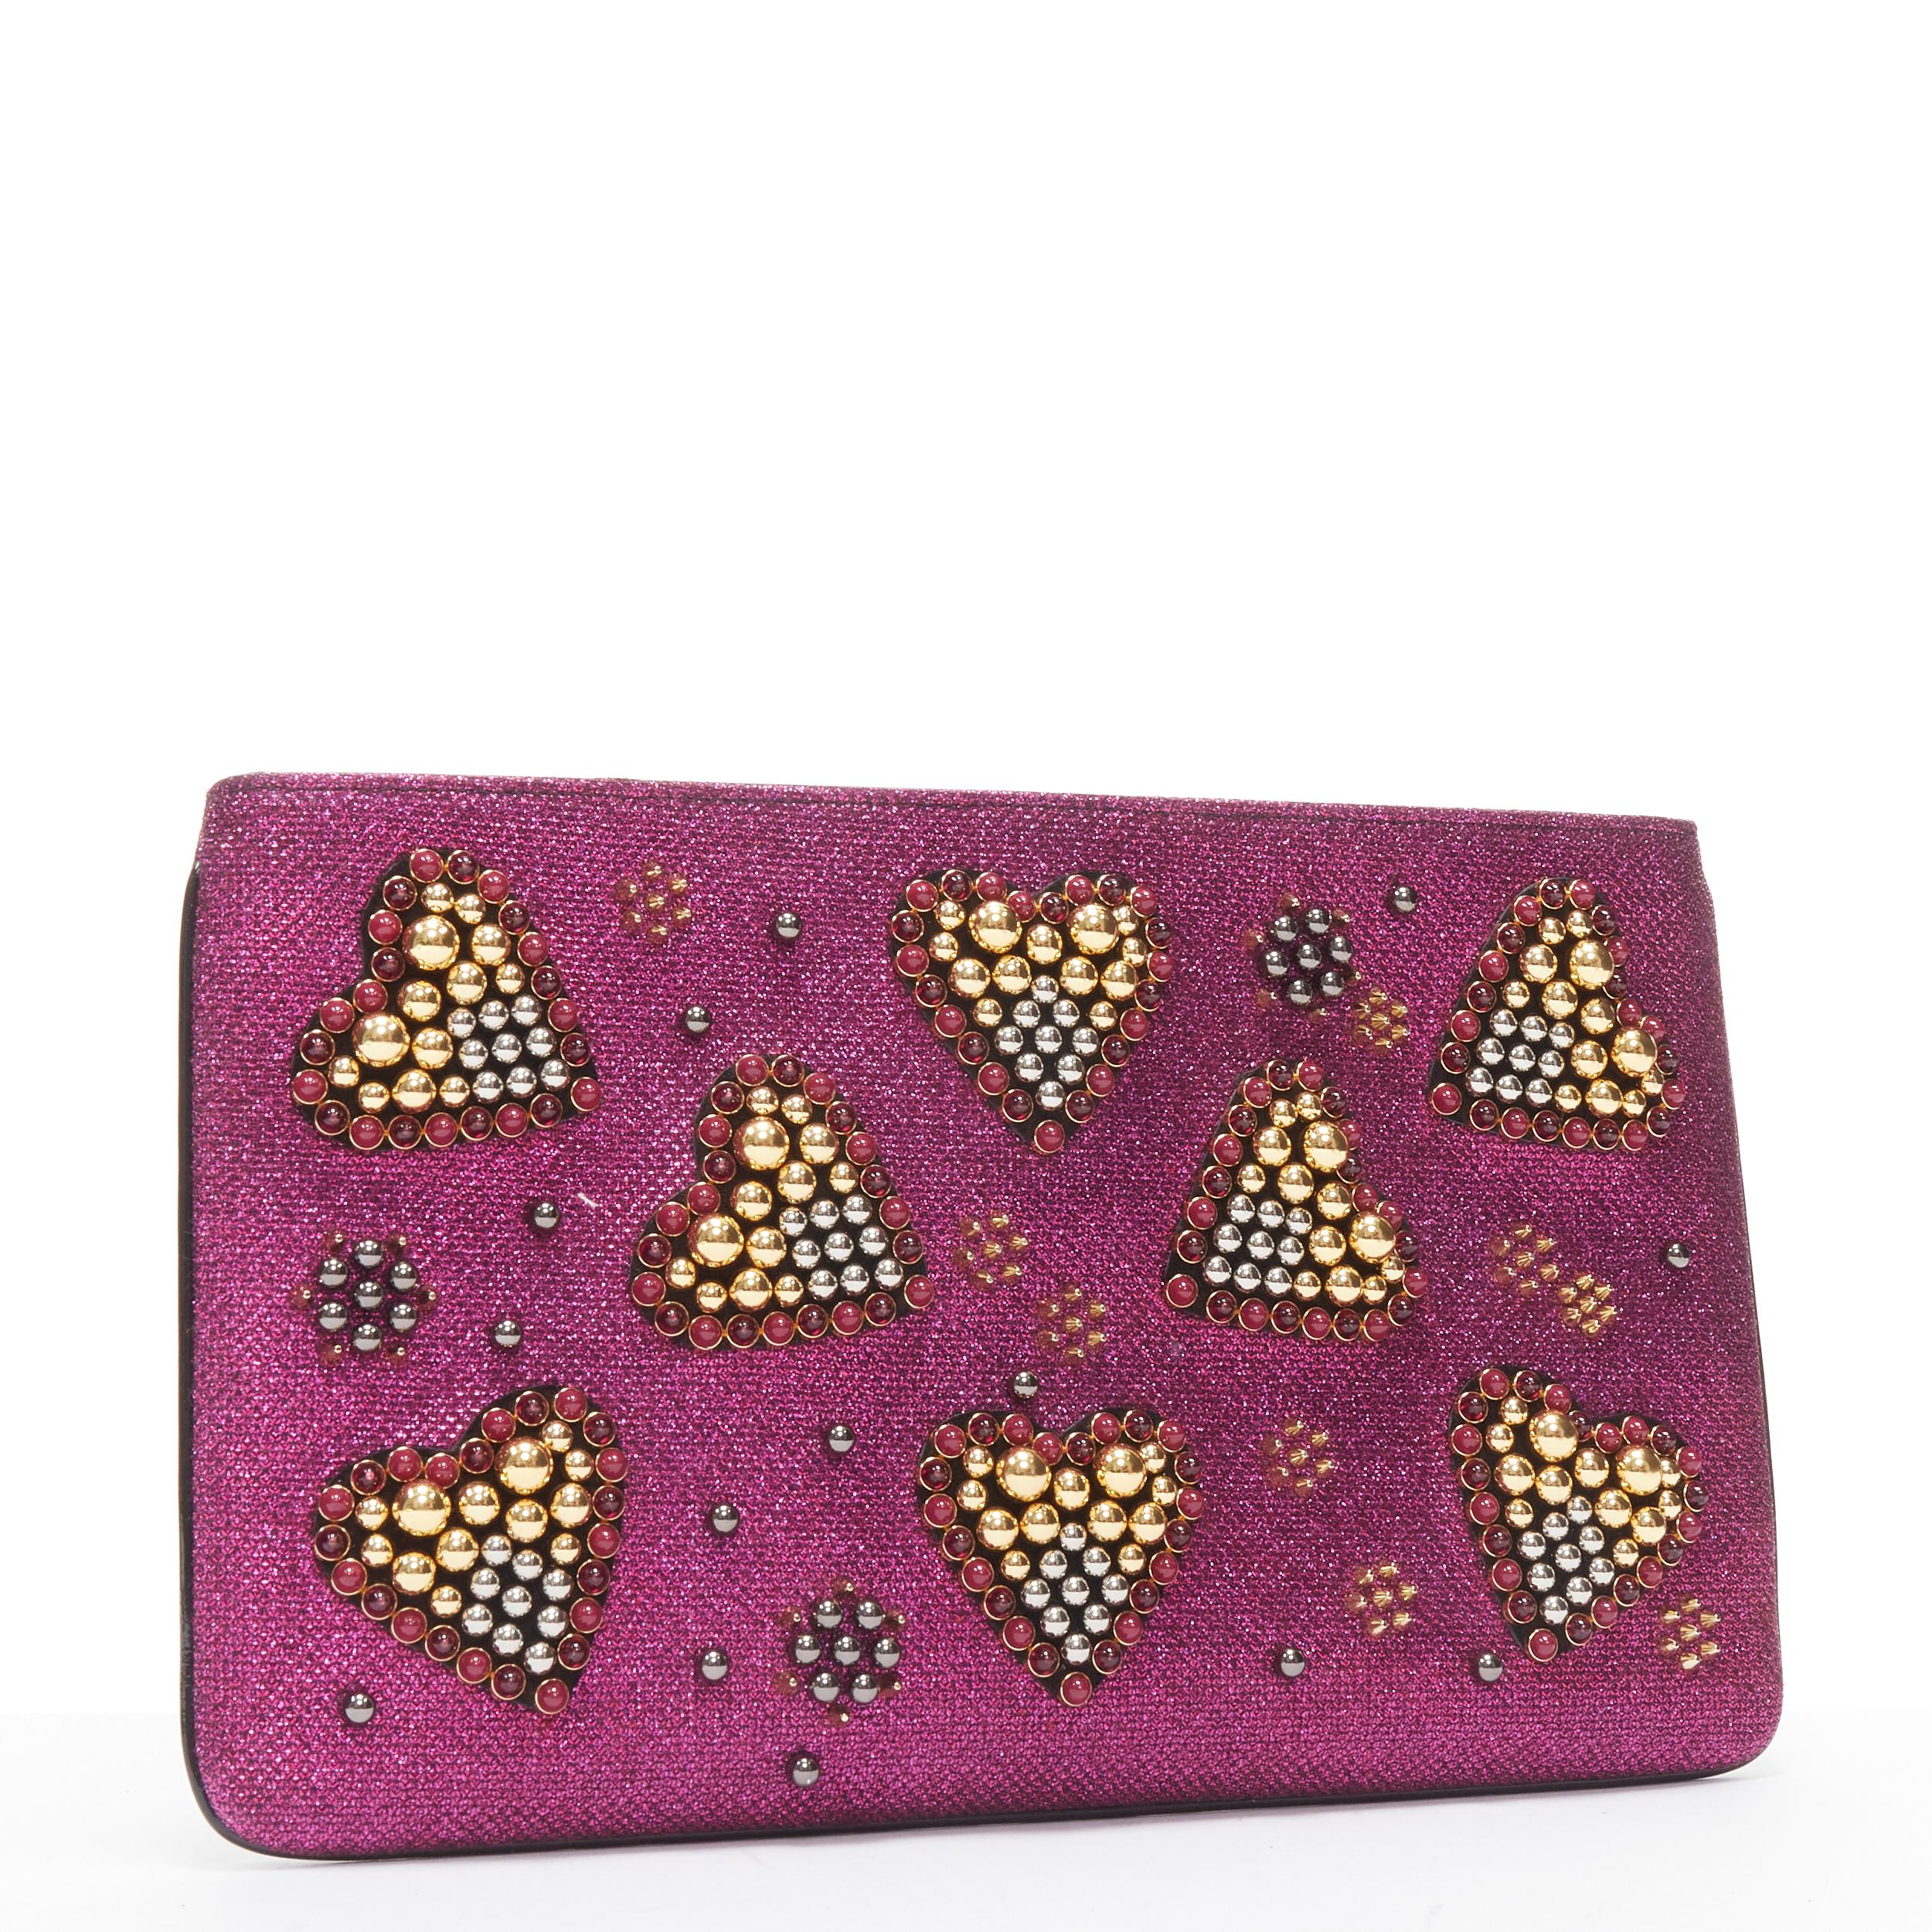 glitter heart purse